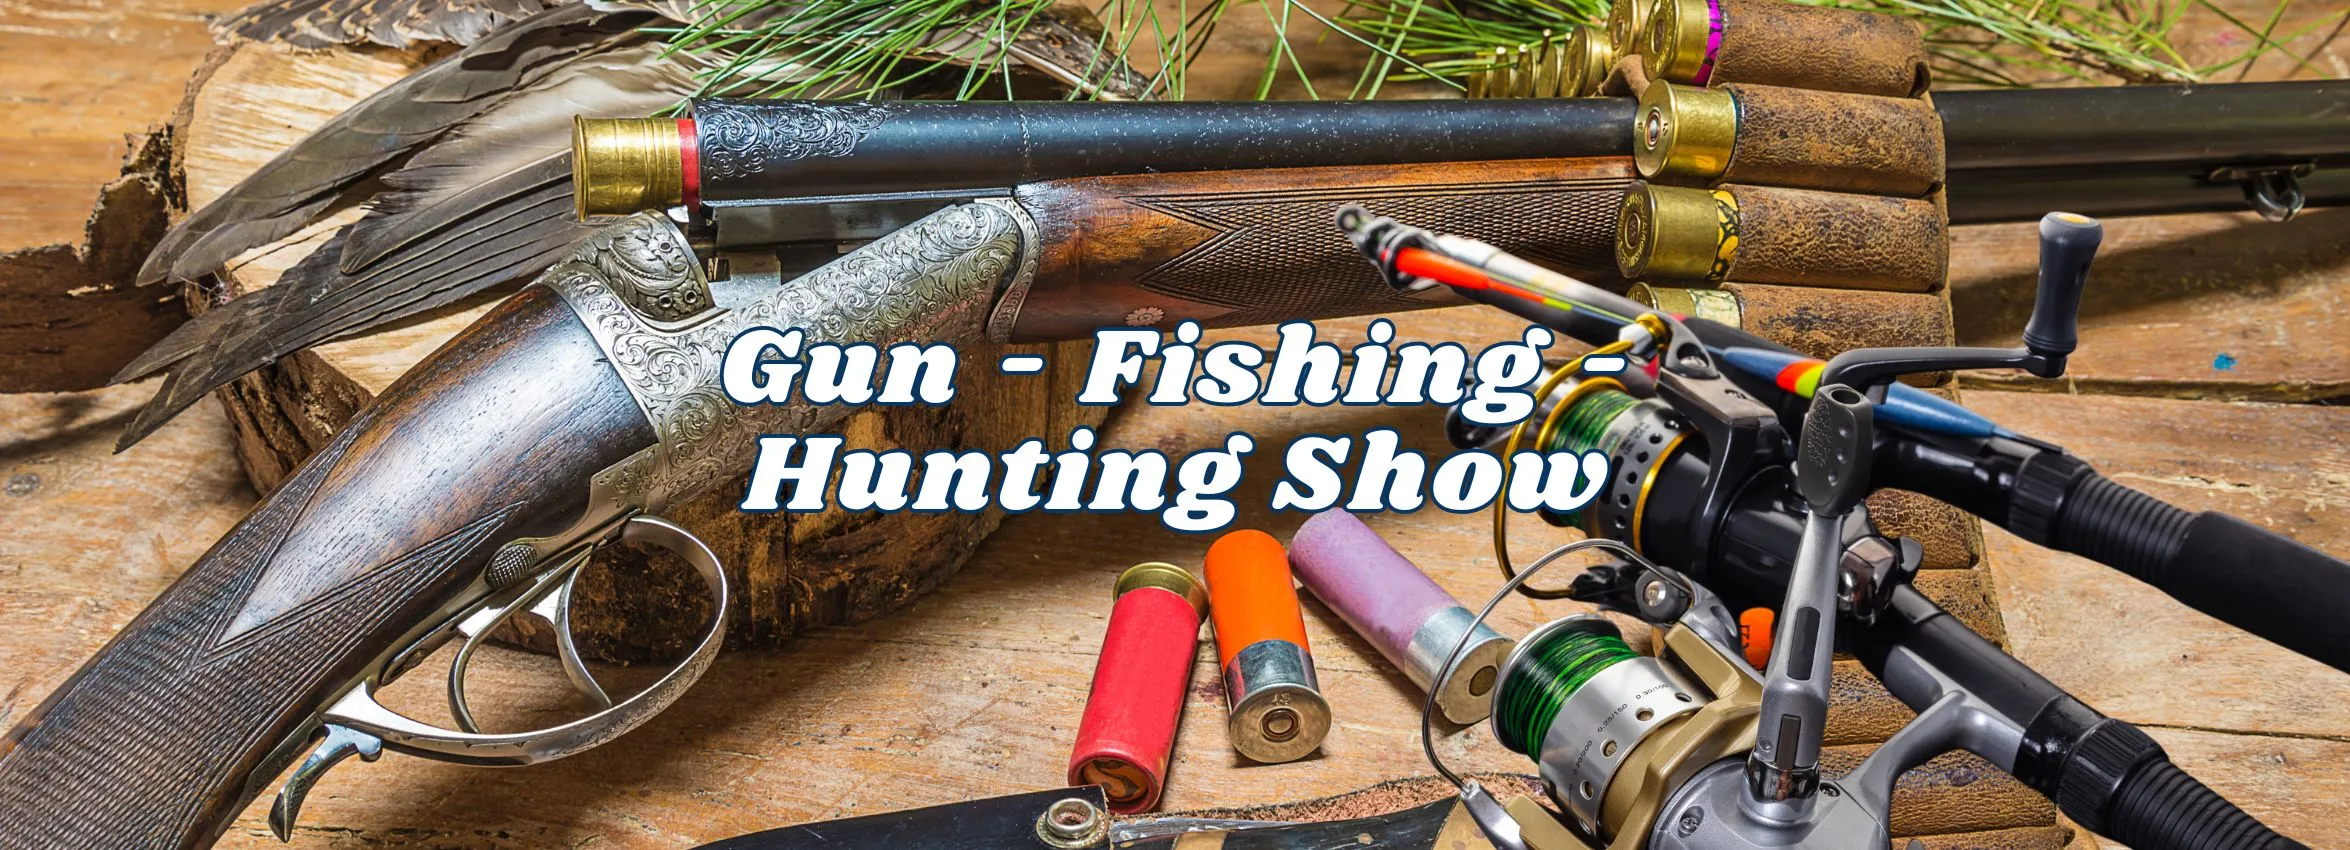 Gun-Fishing-Hunting-Show_Desktop_ET